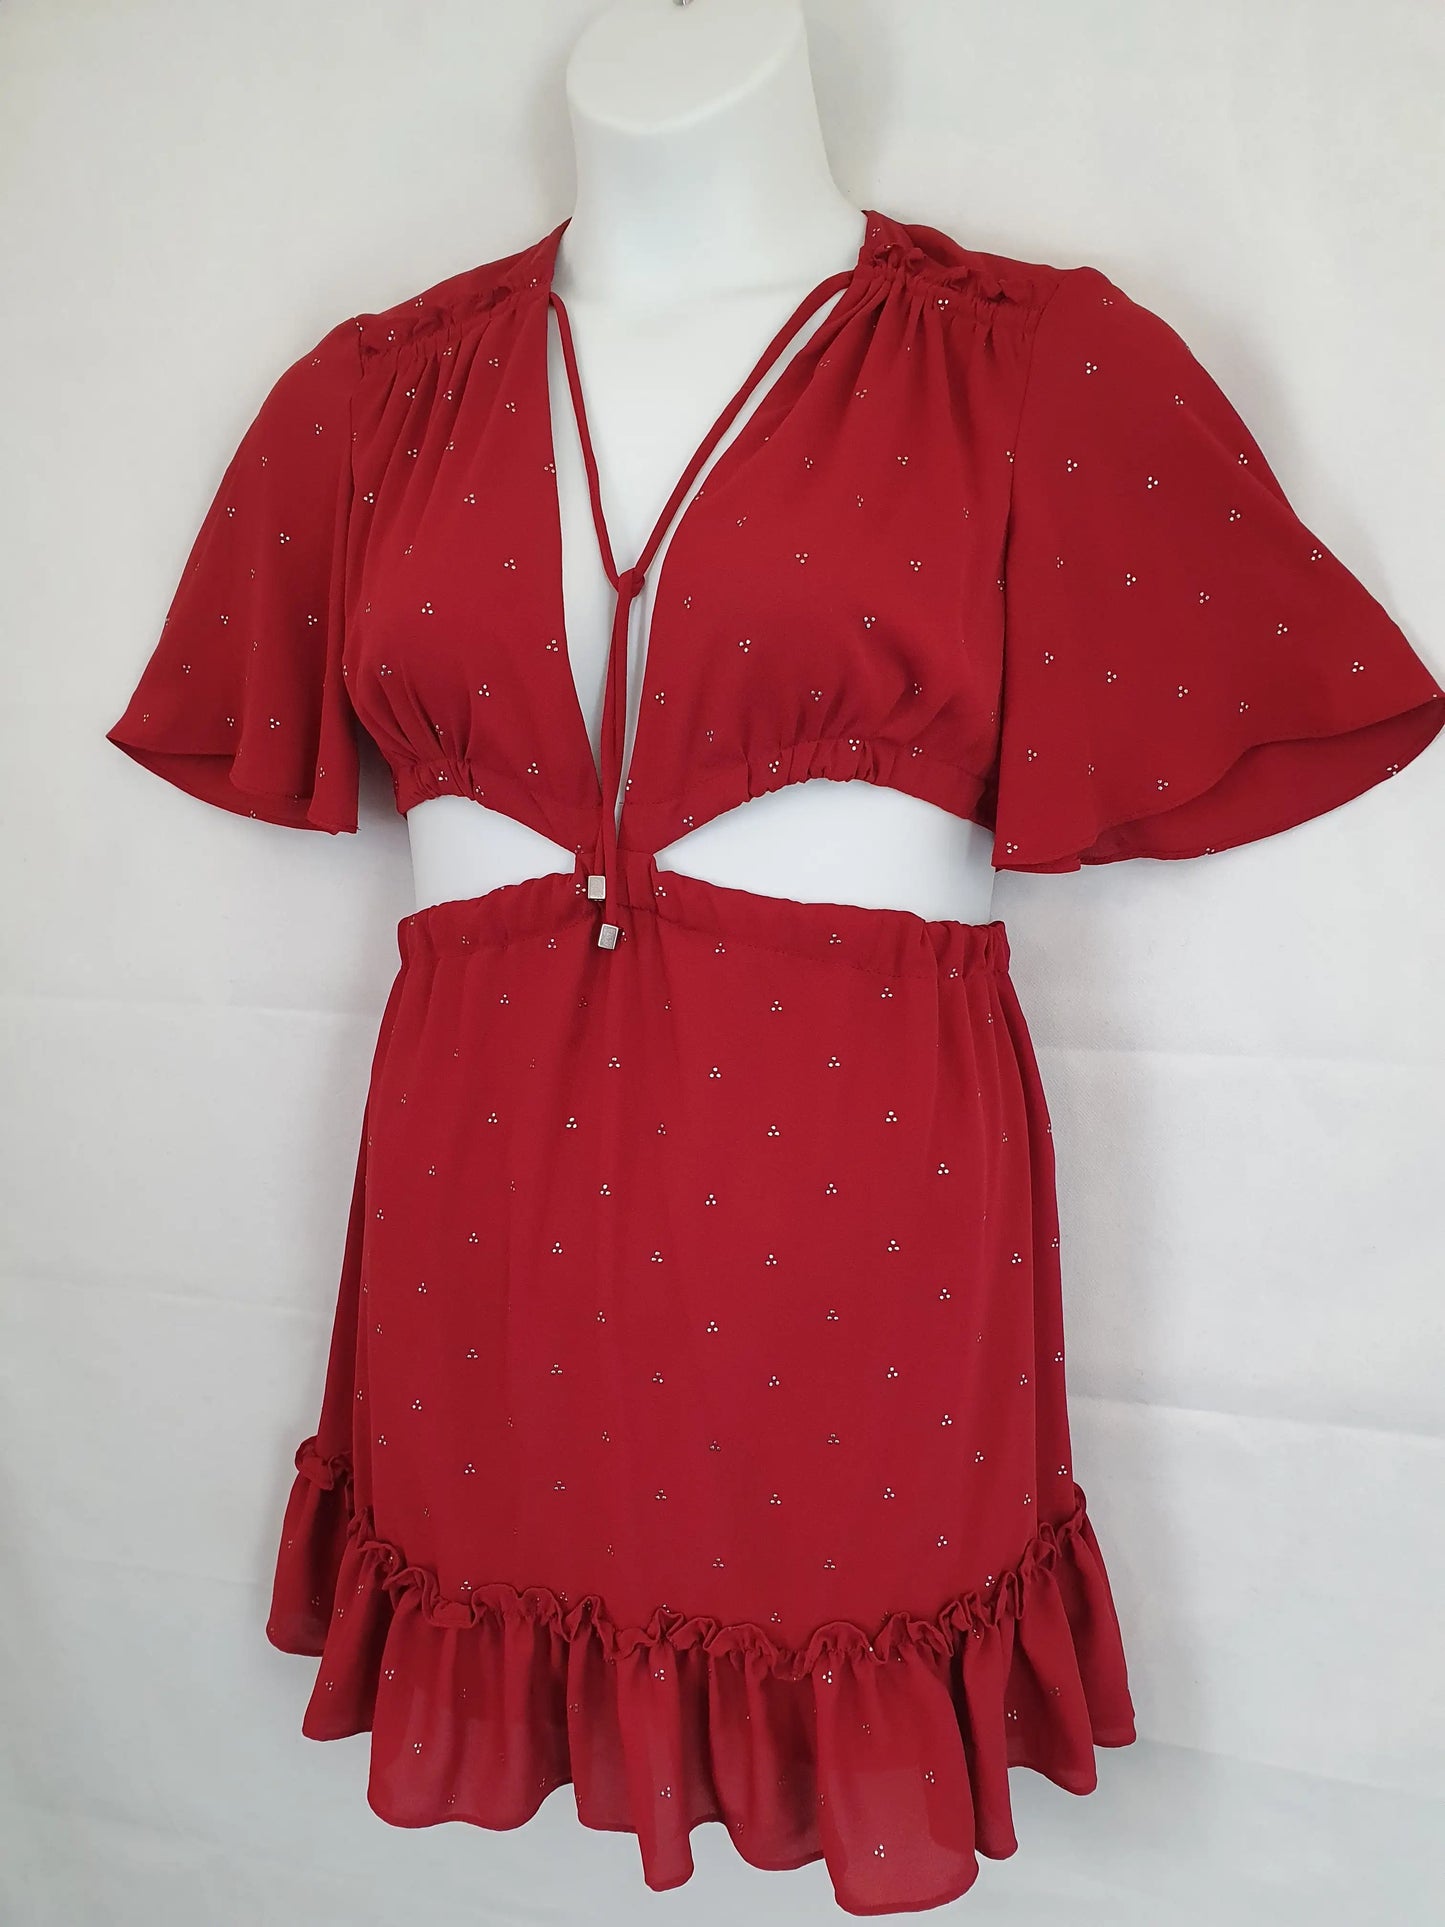 Bec & Bridge Burgundy Deep V Neck Peep Mini Dress Size 12 by SwapUp-Online Second Hand Store-Online Thrift Store